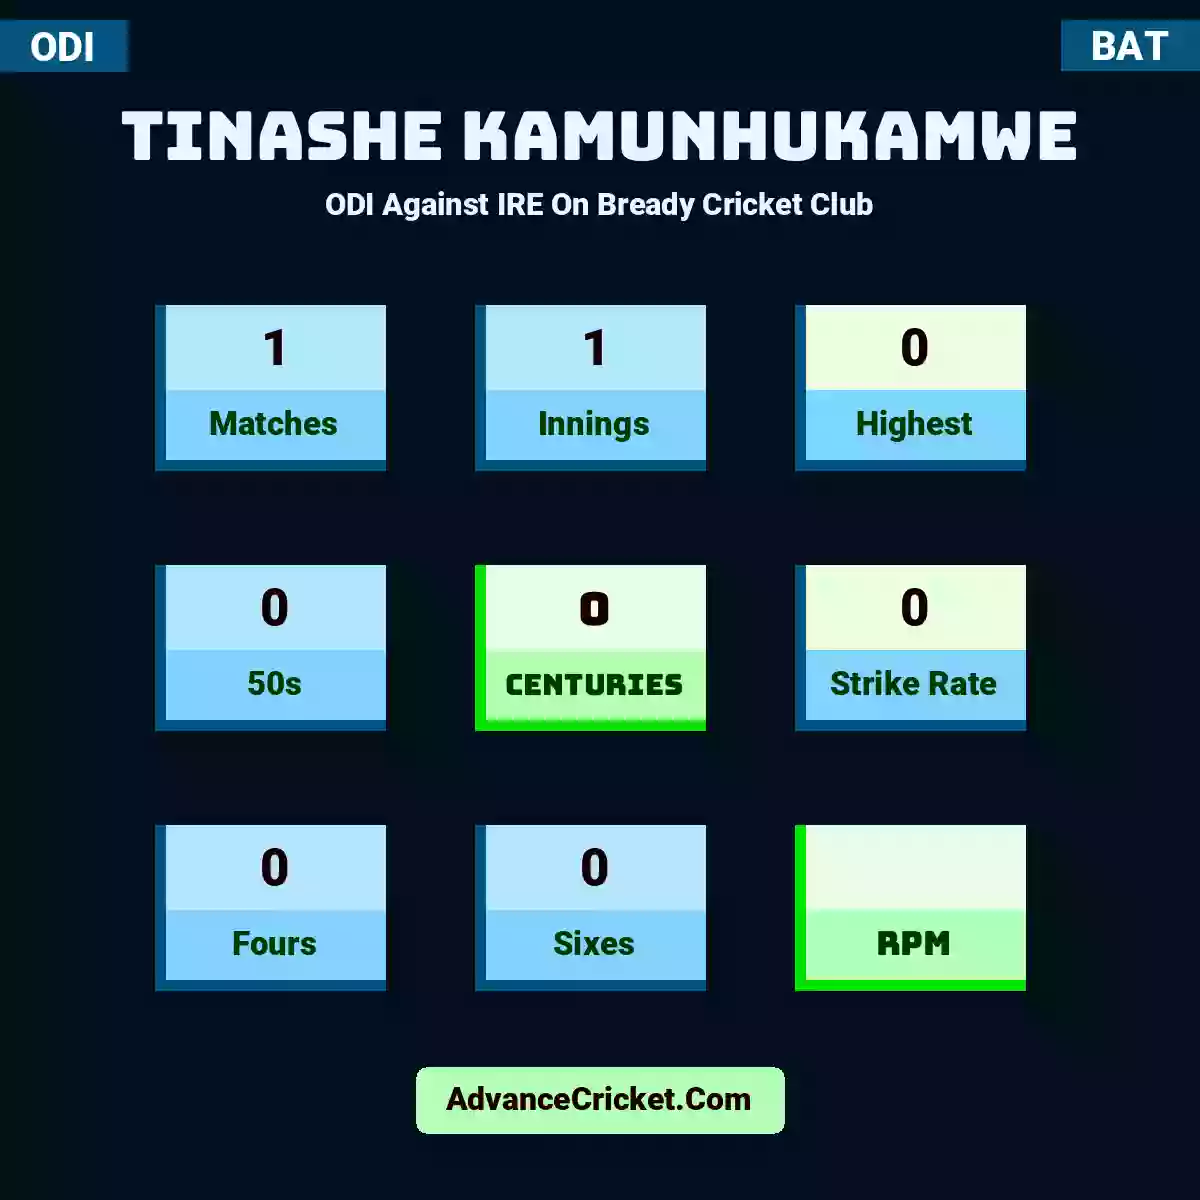 Tinashe Kamunhukamwe ODI  Against IRE On Bready Cricket Club, Tinashe Kamunhukamwe played 1 matches, scored 0 runs as highest, 0 half-centuries, and 0 centuries, with a strike rate of 0. T.Kamunhukamwe hit 0 fours and 0 sixes.